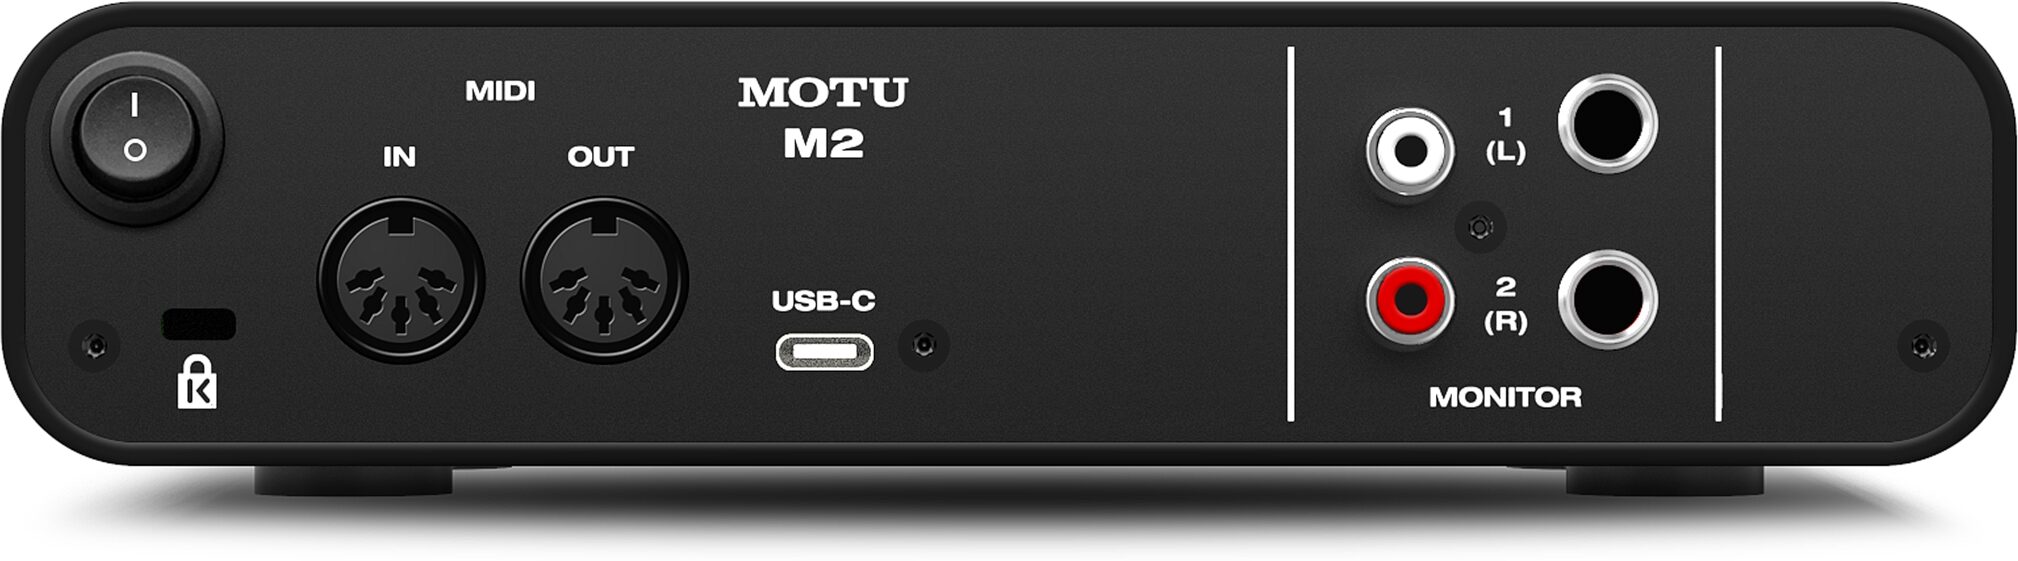 MOTU M2 USB Audio Interface | zZounds